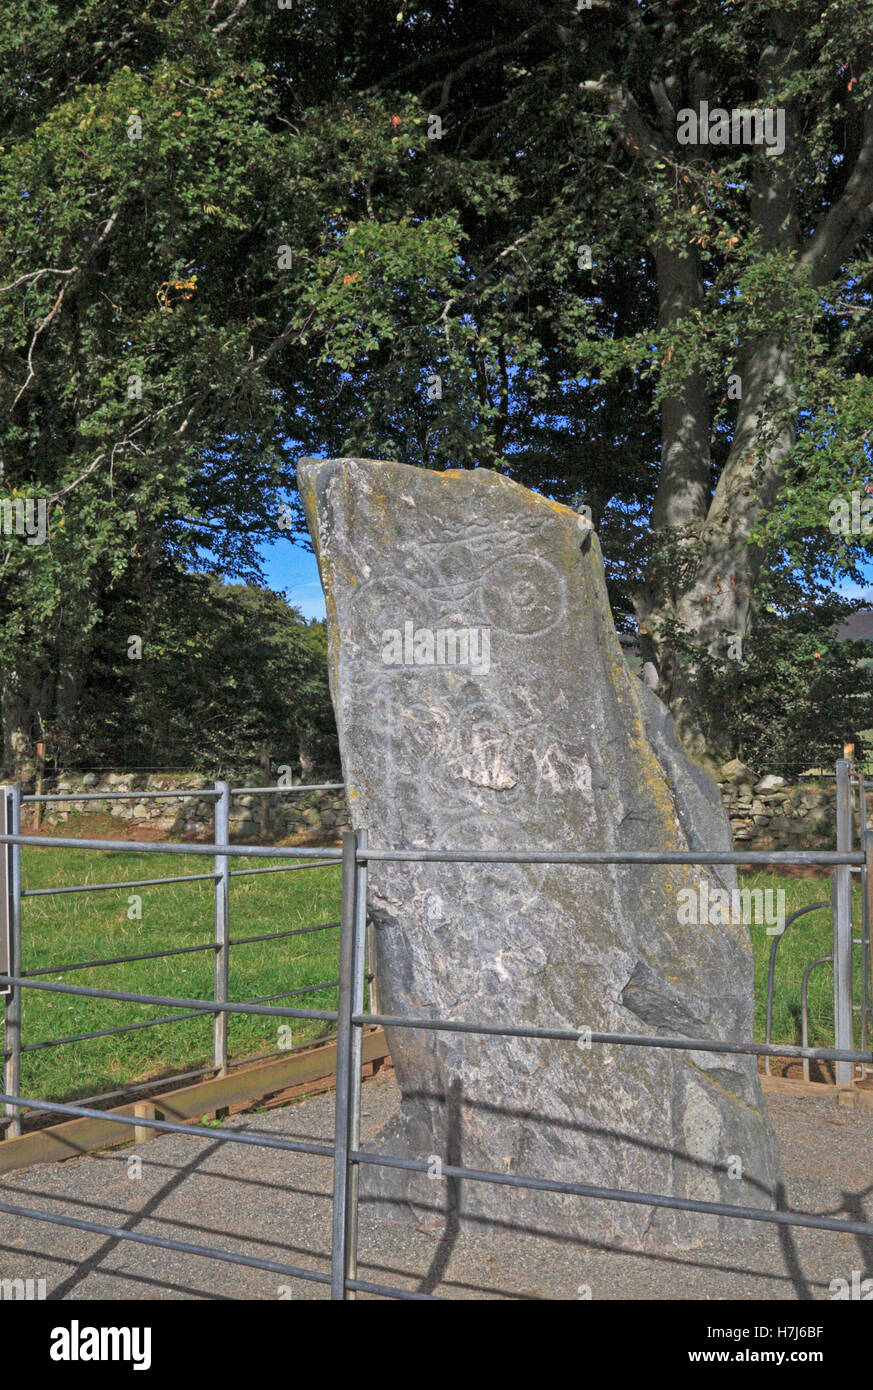 The Picardy Stone, a Pictish symbol stone near Insch, Aberdeenshire, Scotland, United Kingdom. Stock Photo